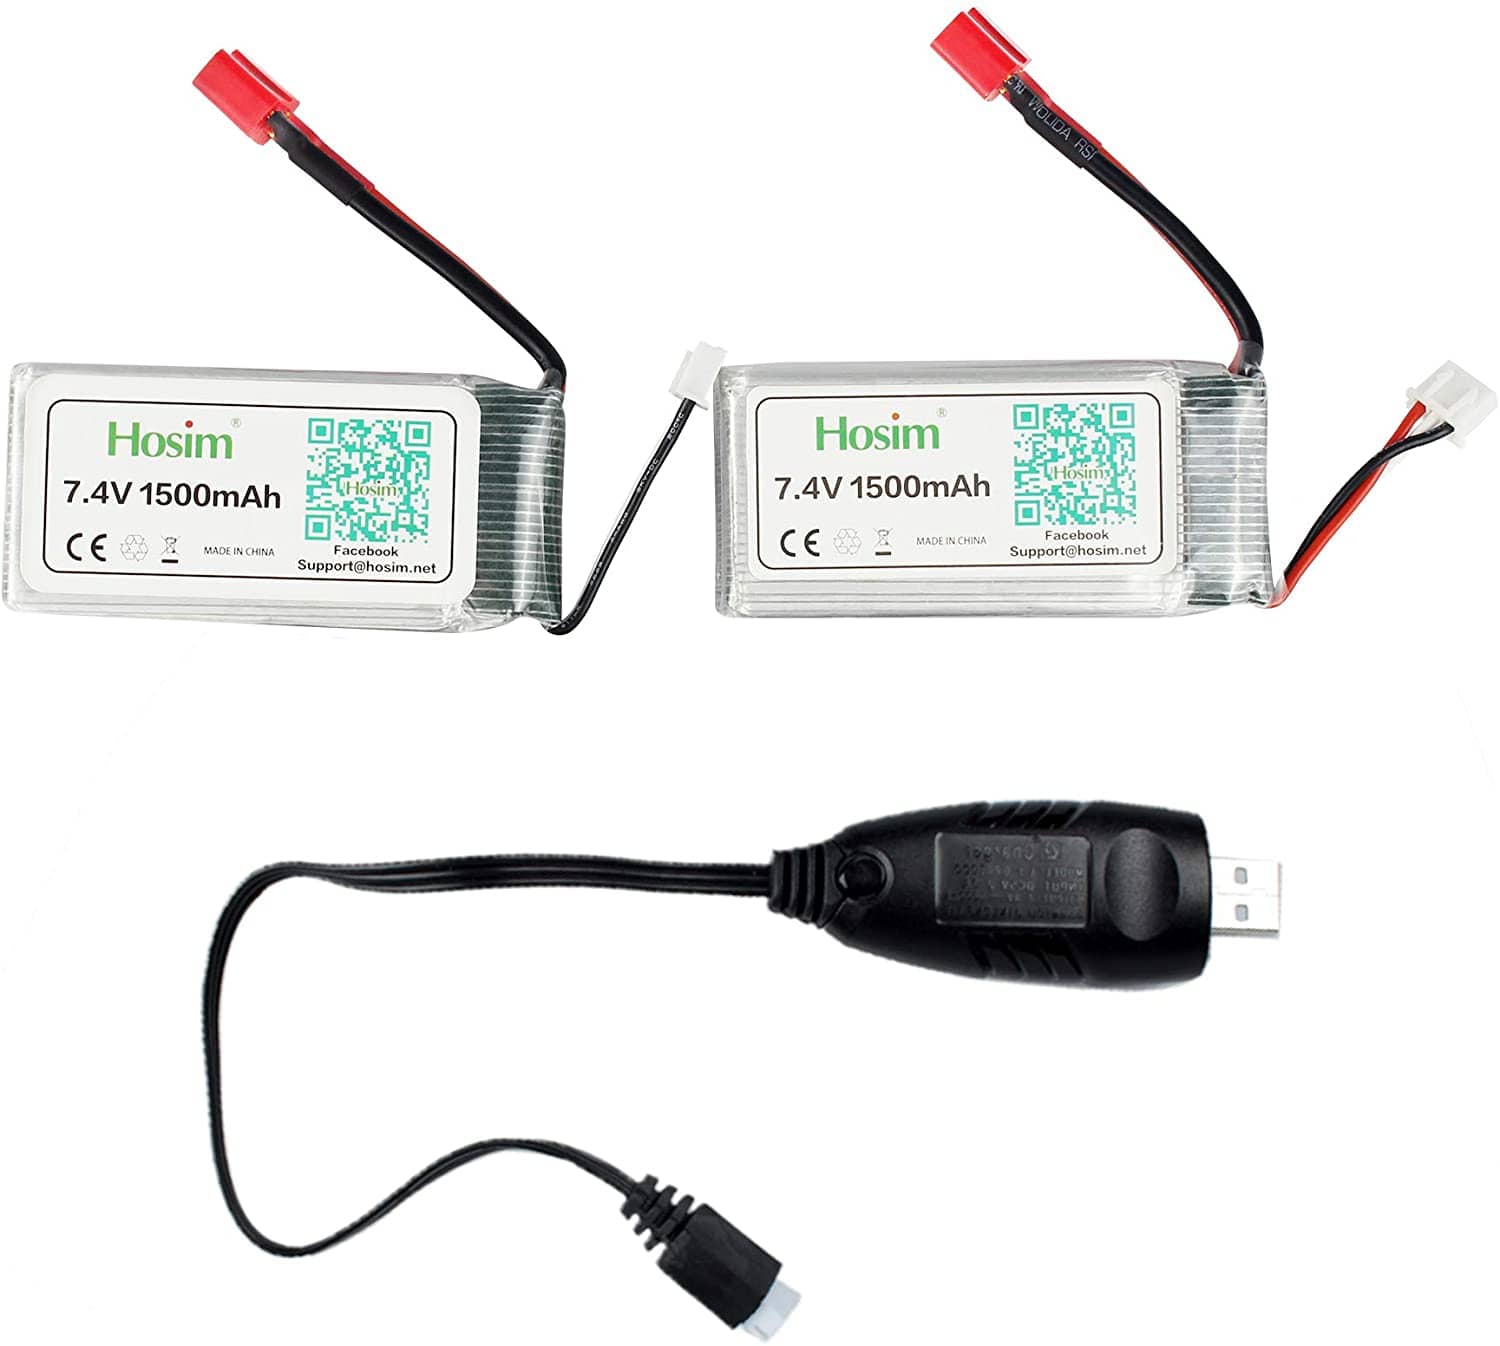 Hosim 2pcs 7.4V 1500mAh 15C T Connector Li-Polymer Rechargeable Battery Pack and 2pcs USB